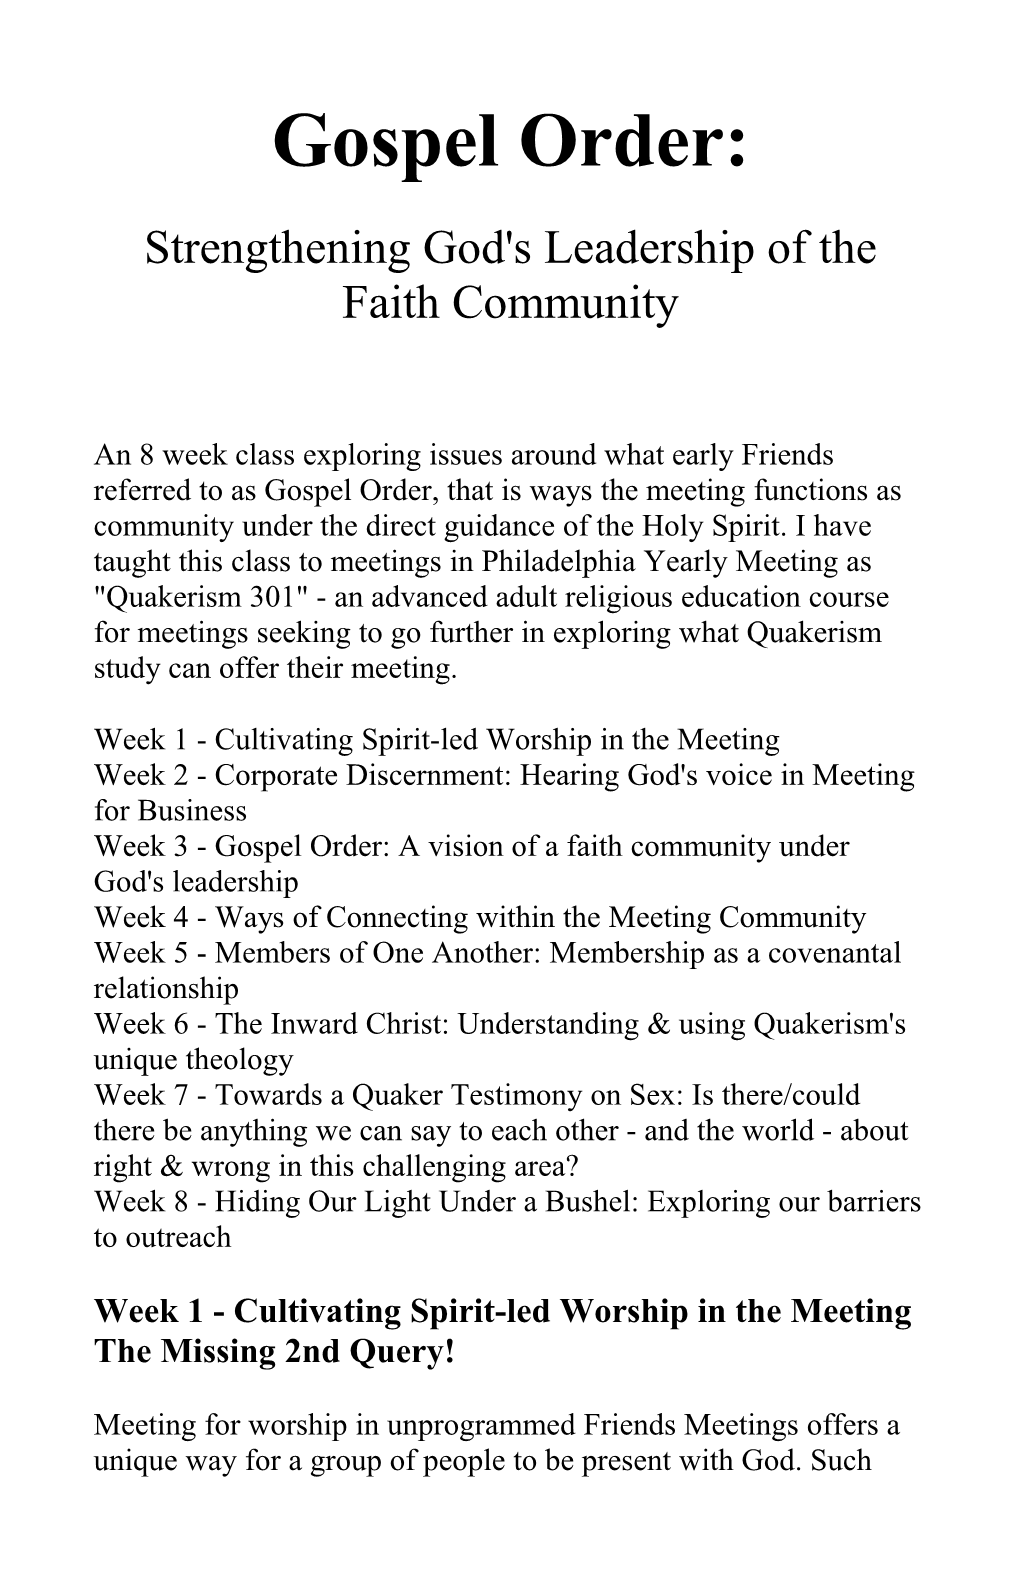 Strengthening God's Leadership of the Faith Community